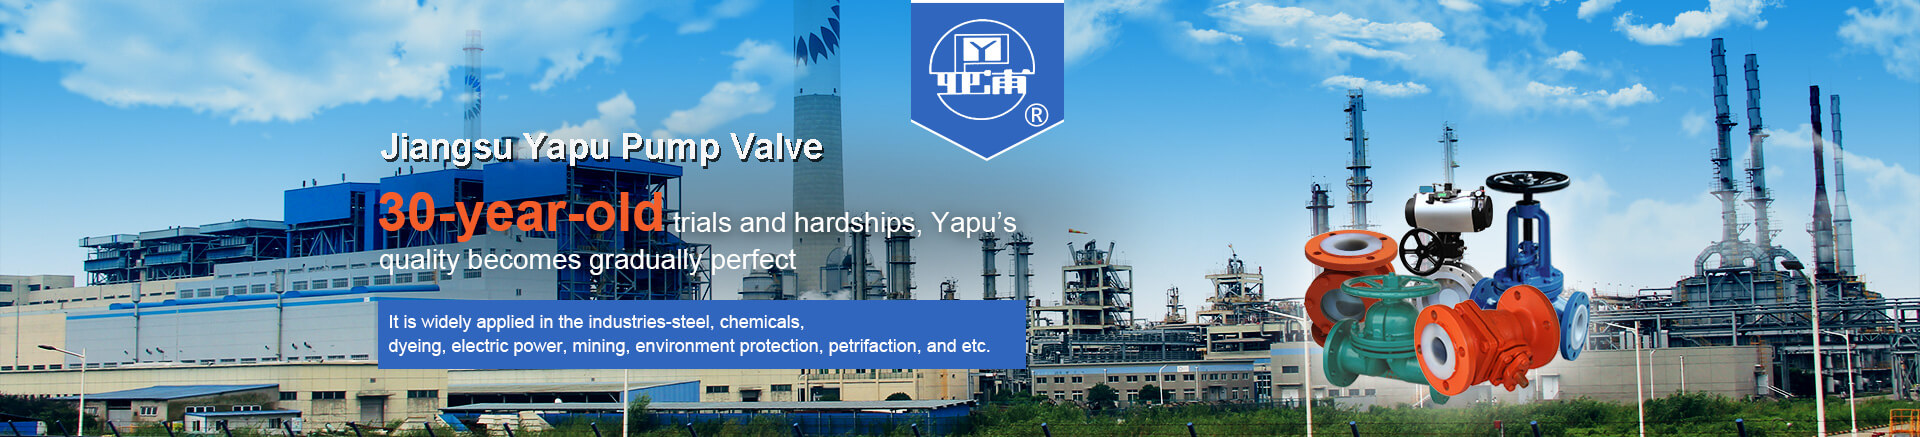 Jiangsu Yapu Pump Valve